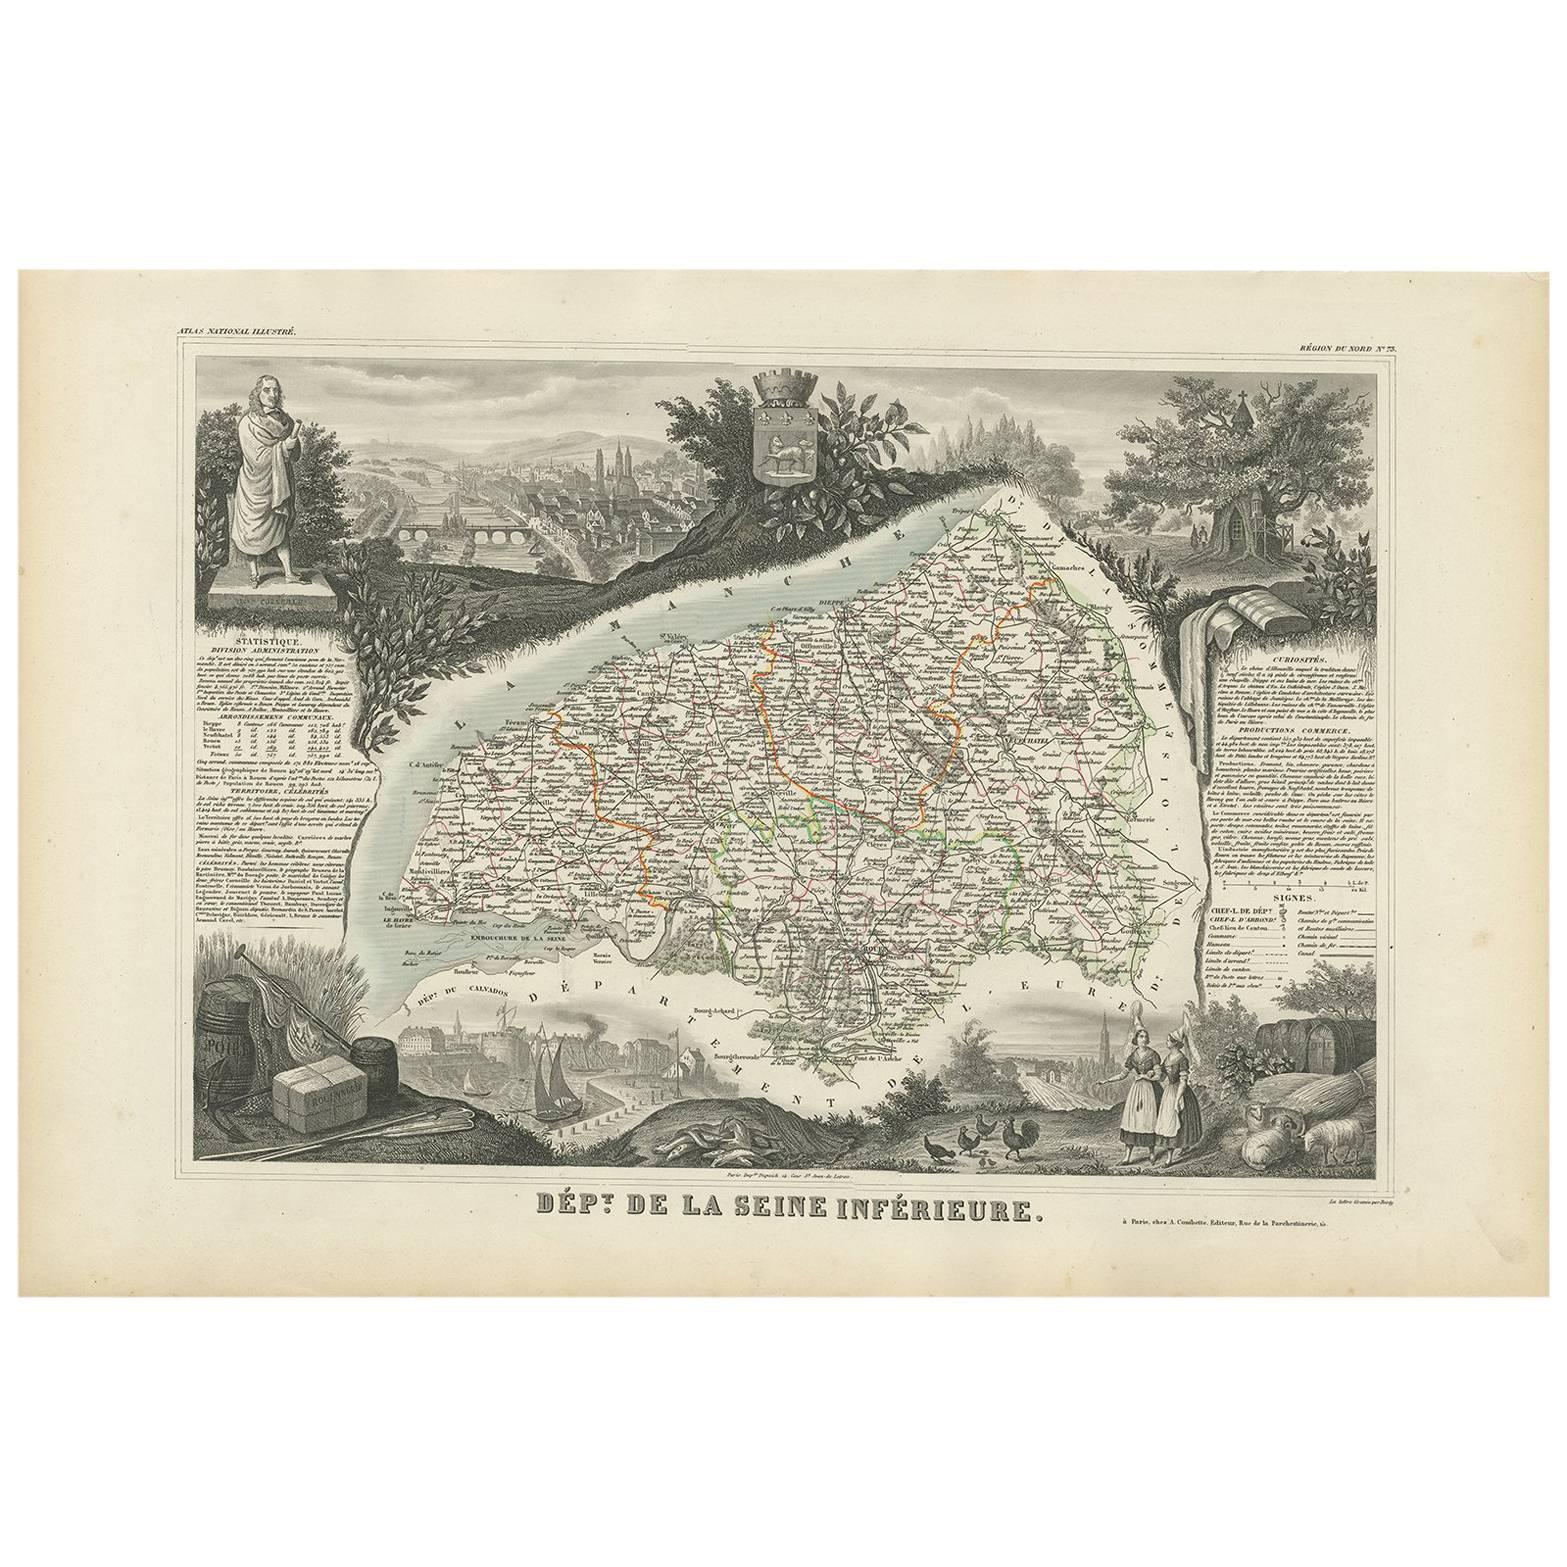 Antique Map of Seine Inférieure, France by V. Levasseur, 1854